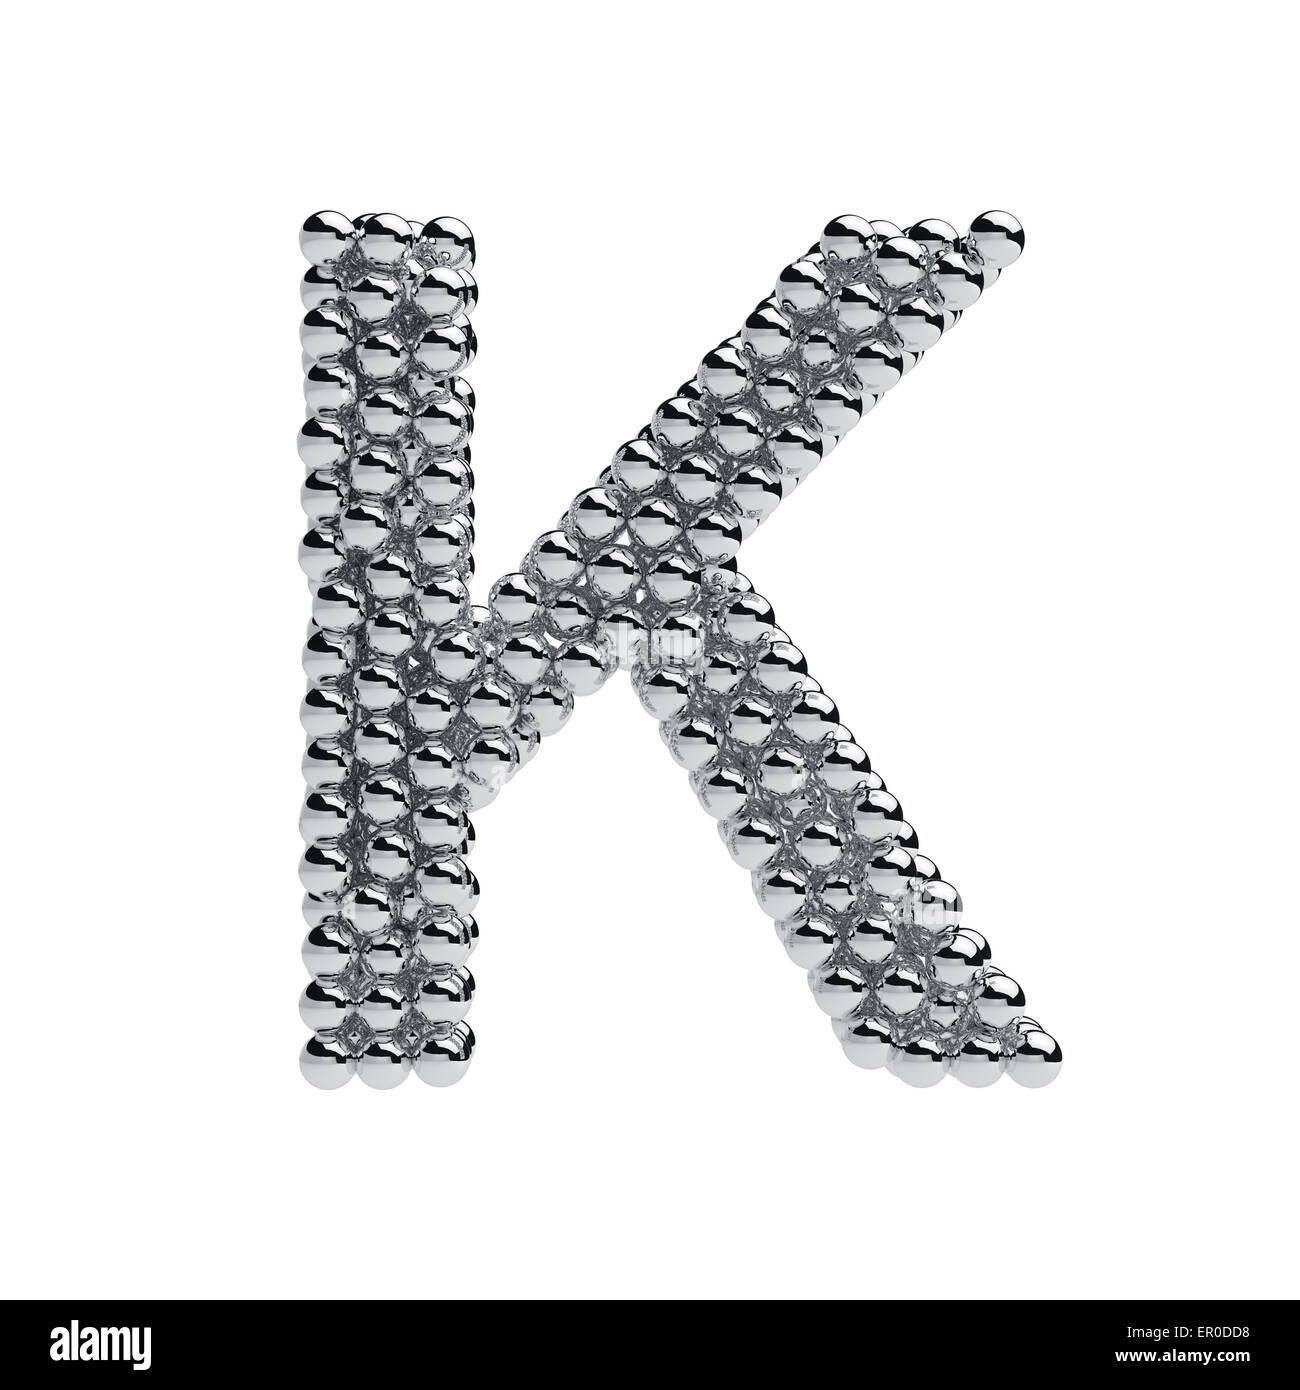 3d render of metallic spheres alphabet letter symbol - K. Isolated on white background Stock Photo